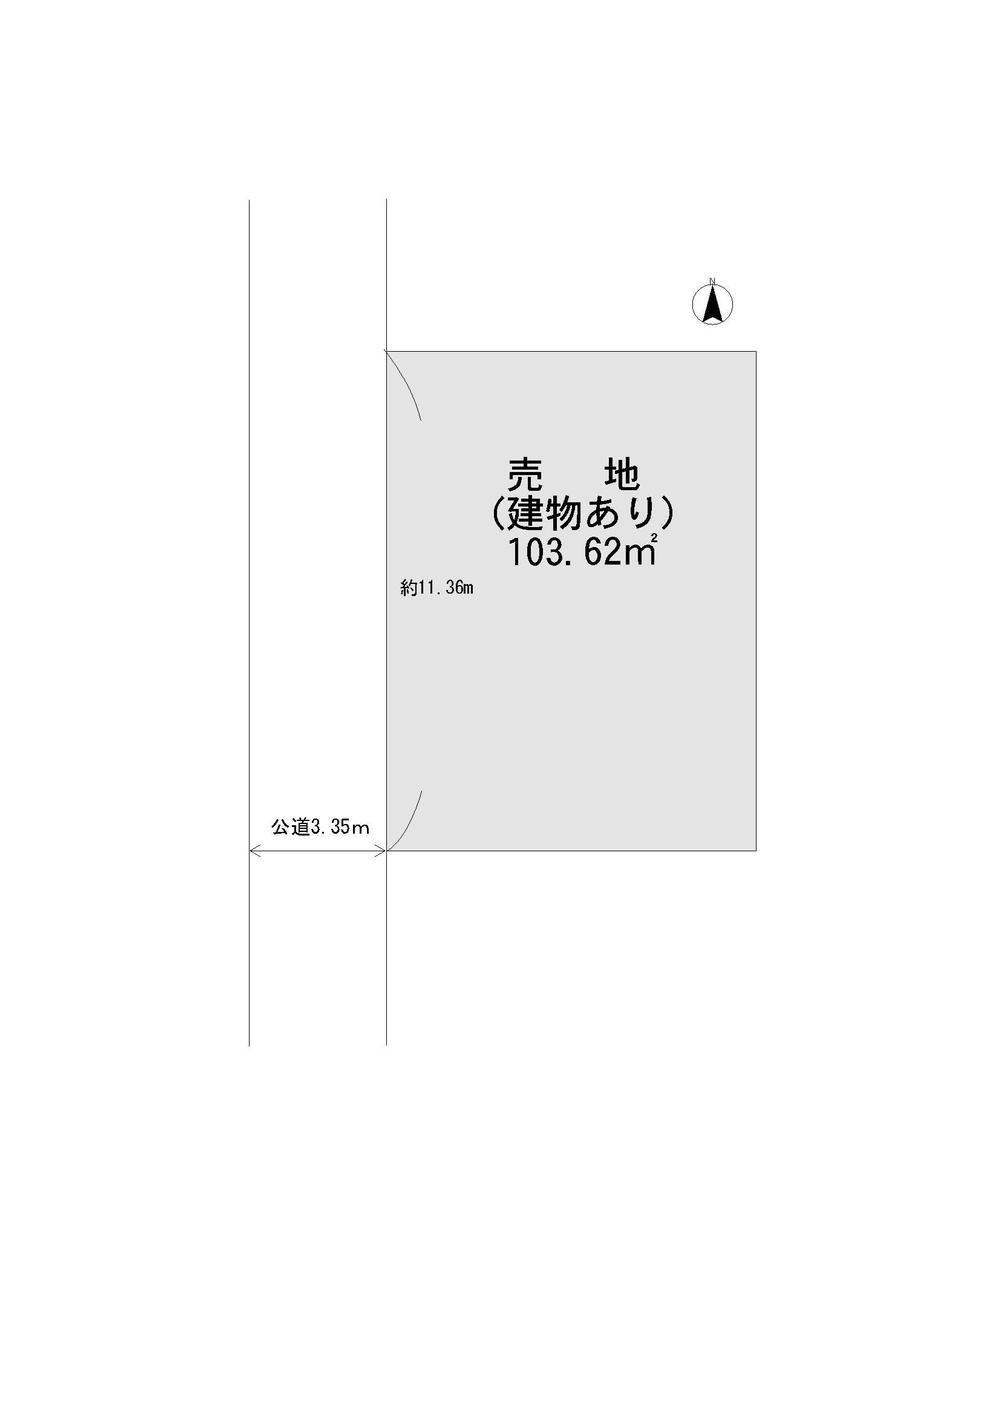 Compartment figure. Land price 16.8 million yen, Land area 103.62 sq m compartment view